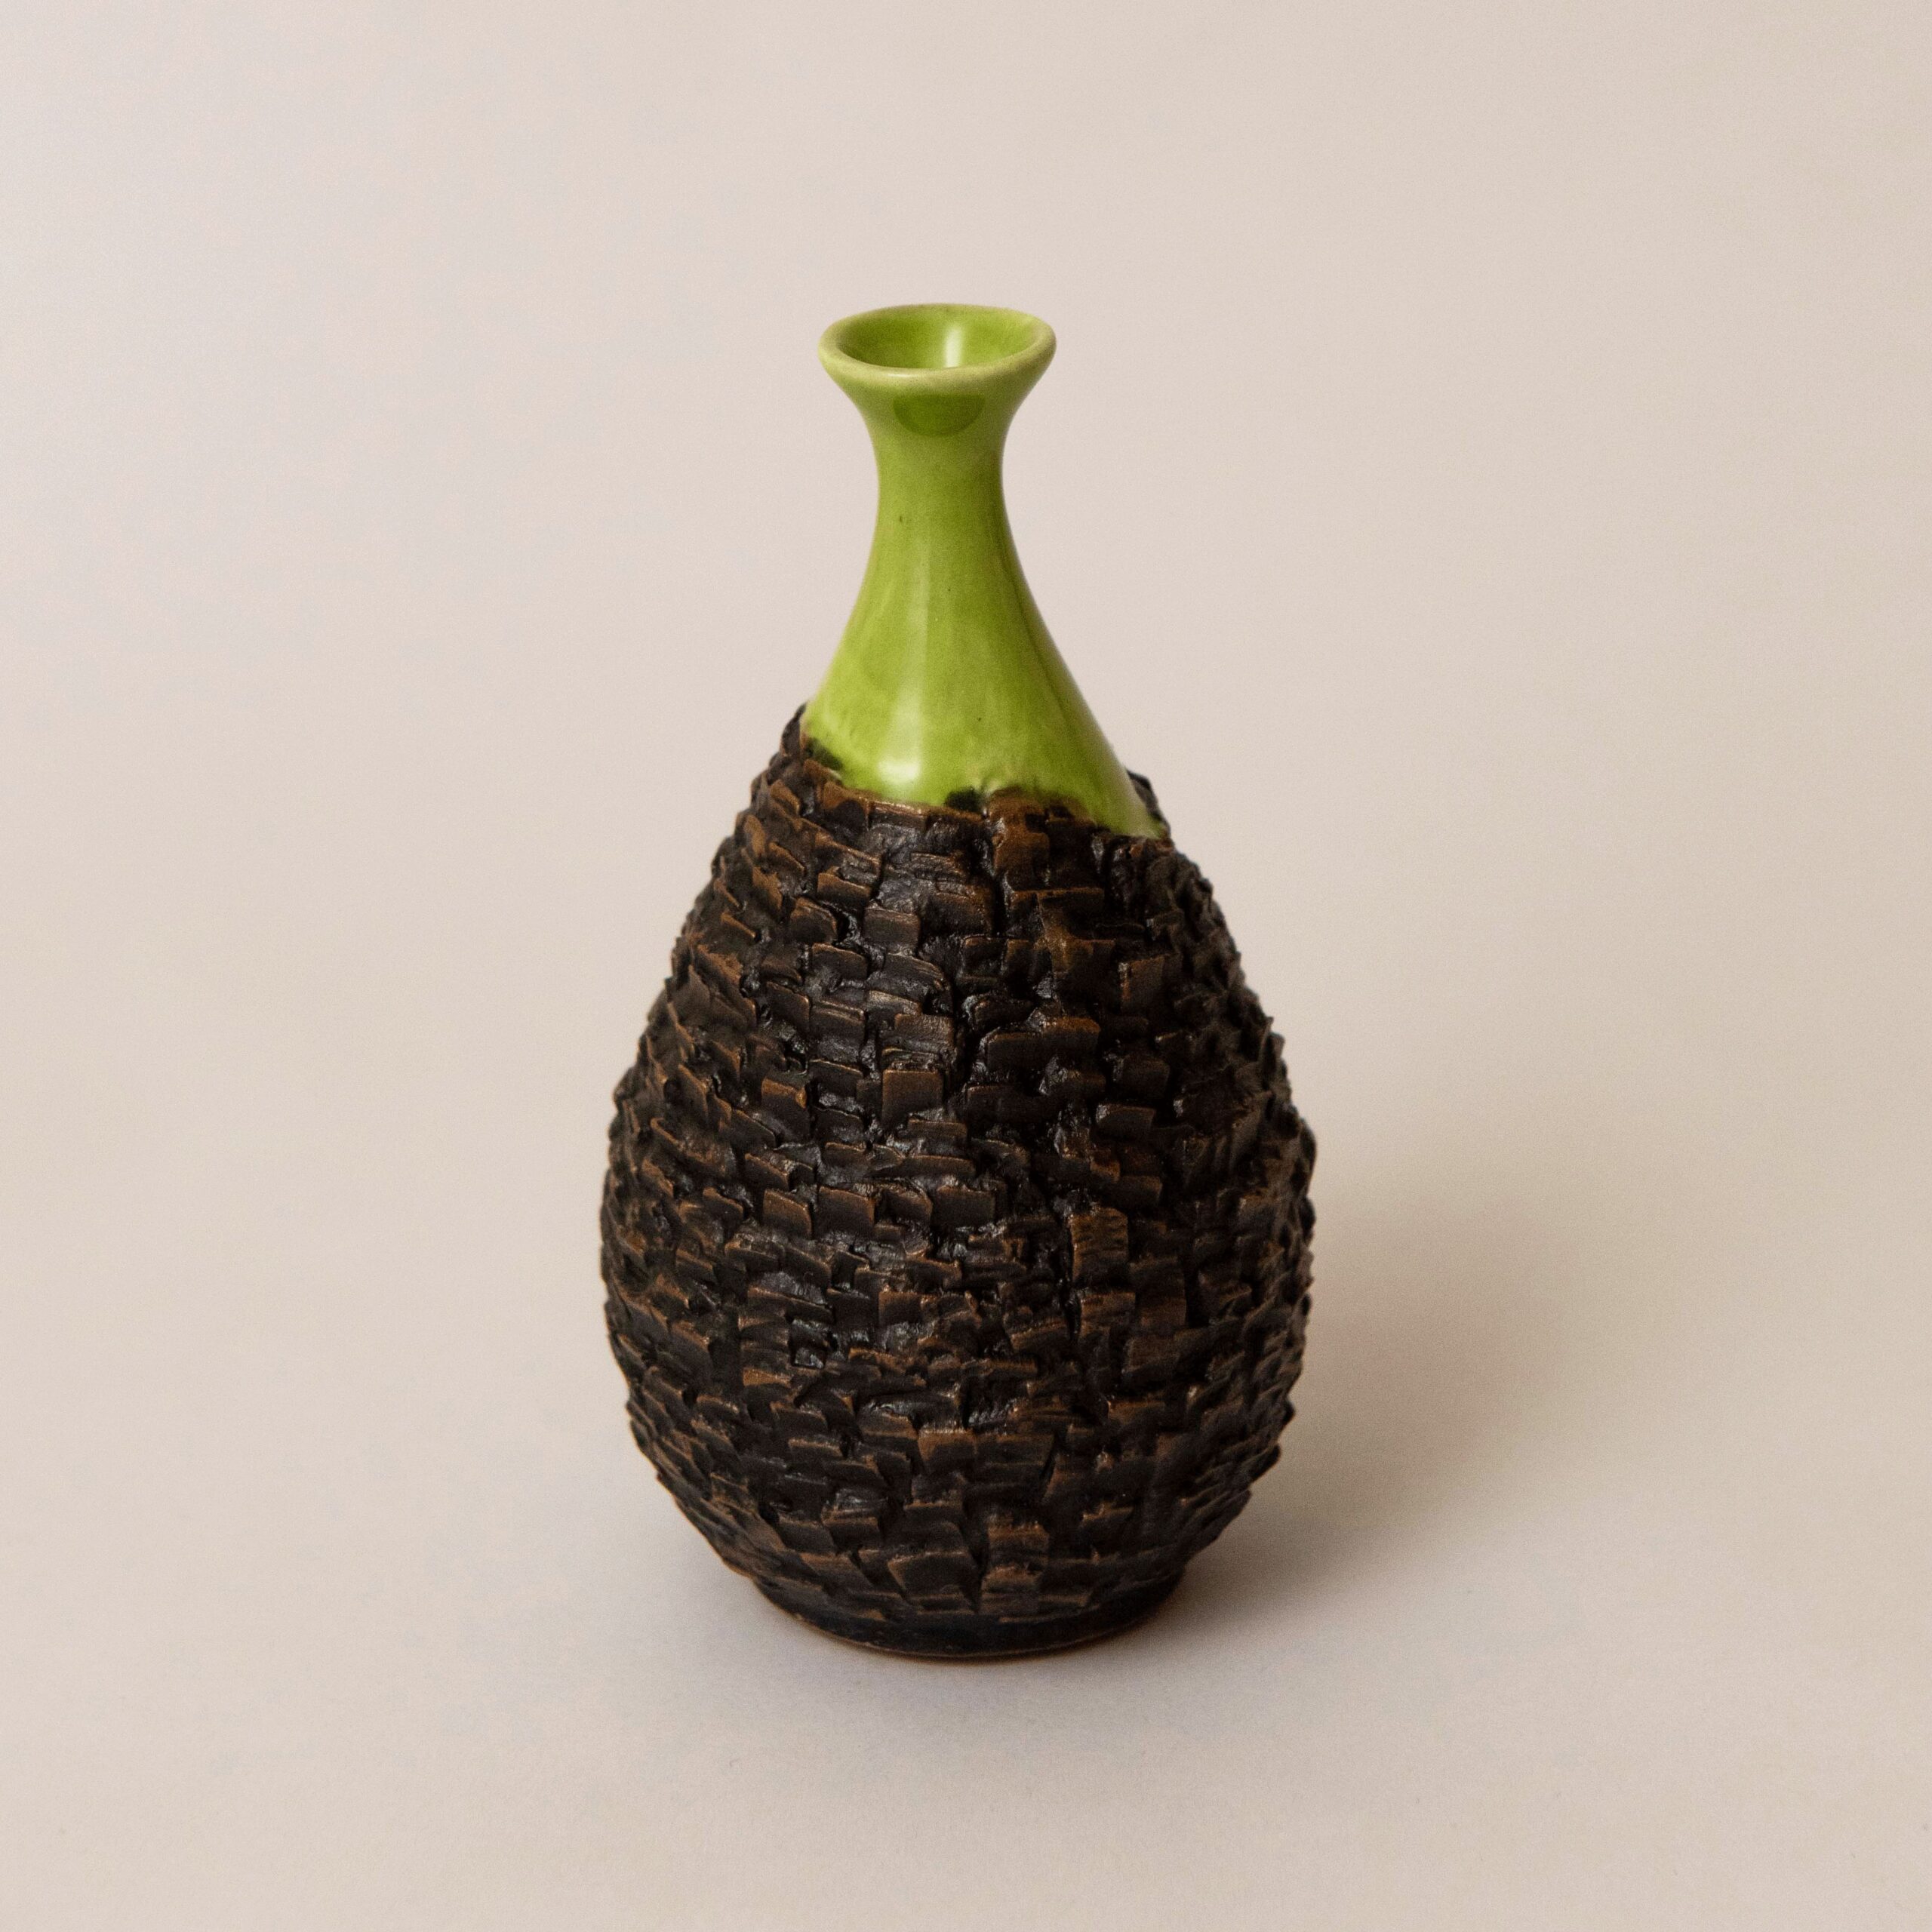 Studio Saboo: Small Green Rock Vase Product Image 1 of 1